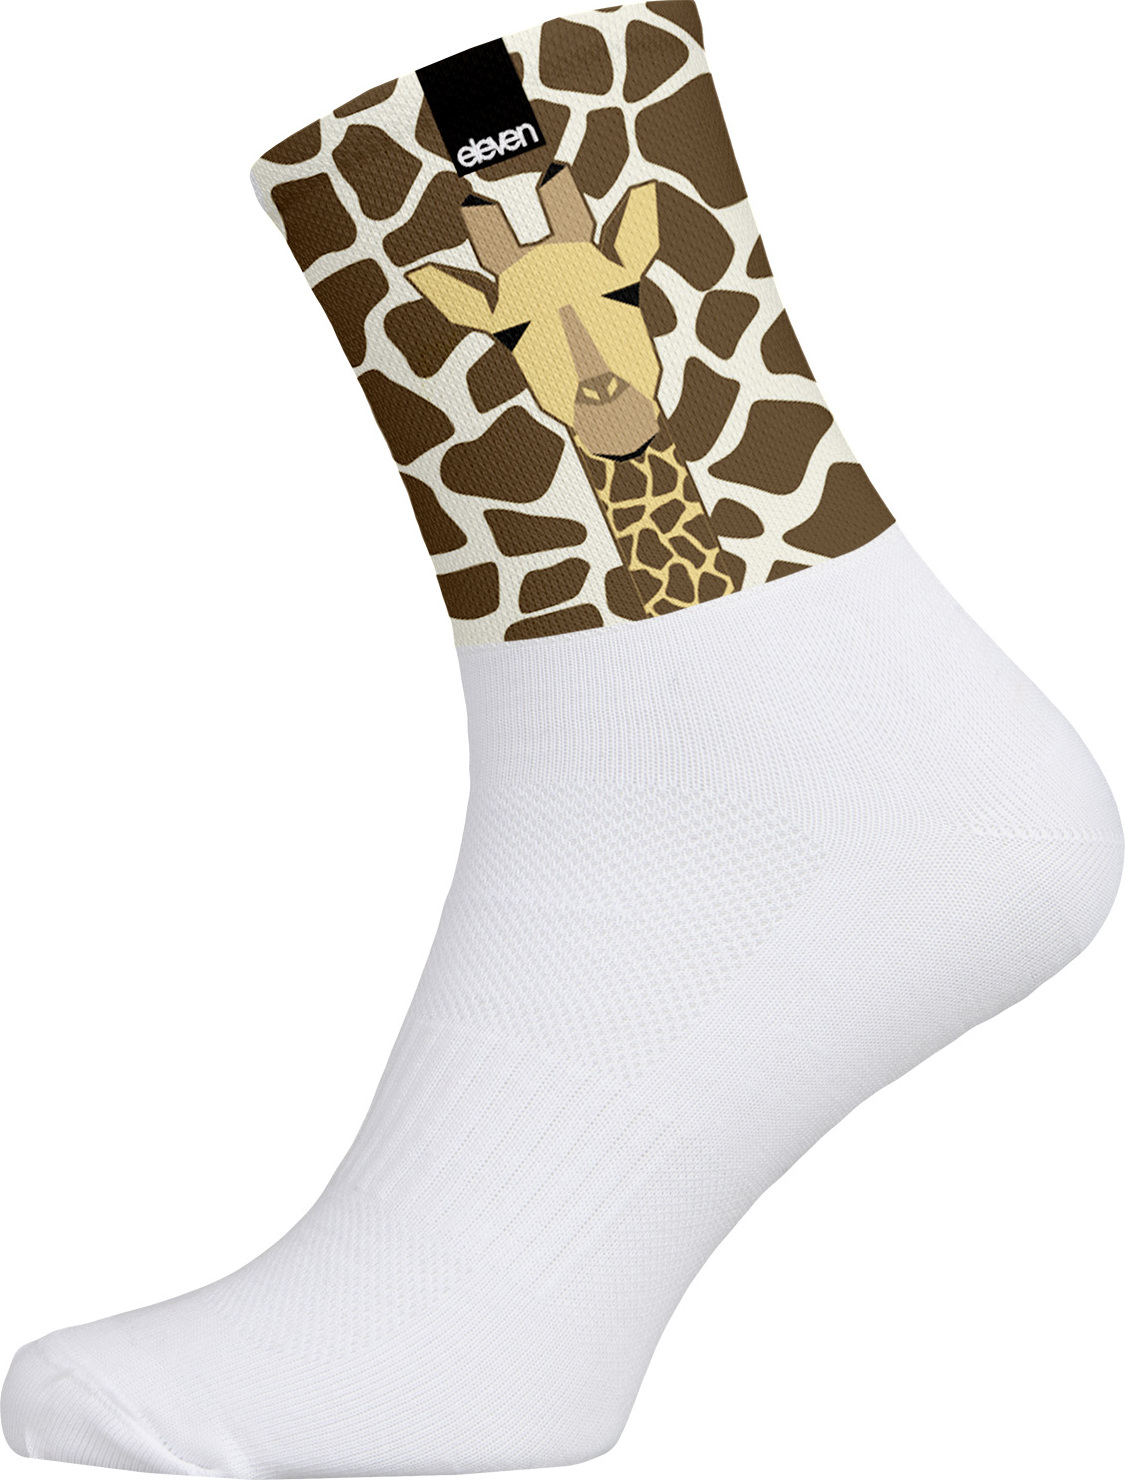 Ponožky ELEVEN Cuba Giraffe Velikost: S (36-38)